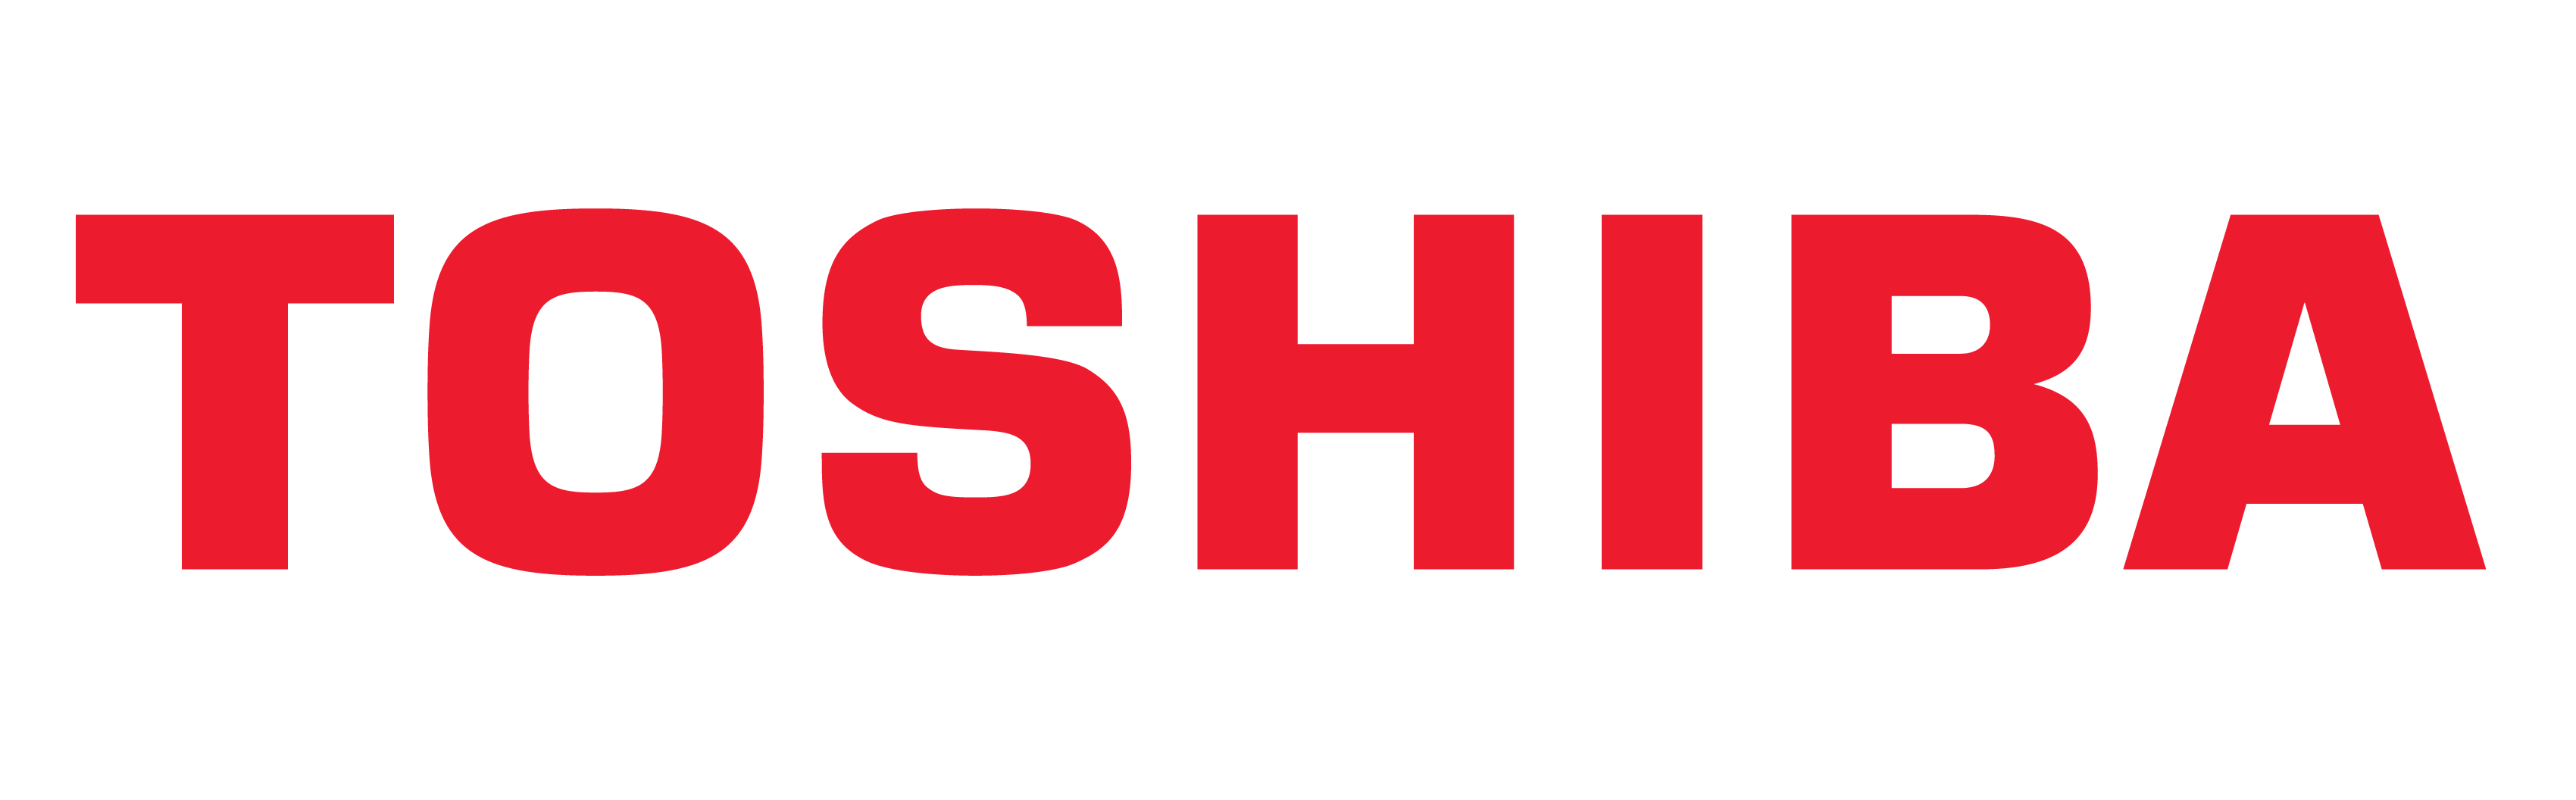 Toshiba TV Logo - Toshiba Logo, Toshiba Symbol, Meaning, History and Evolution